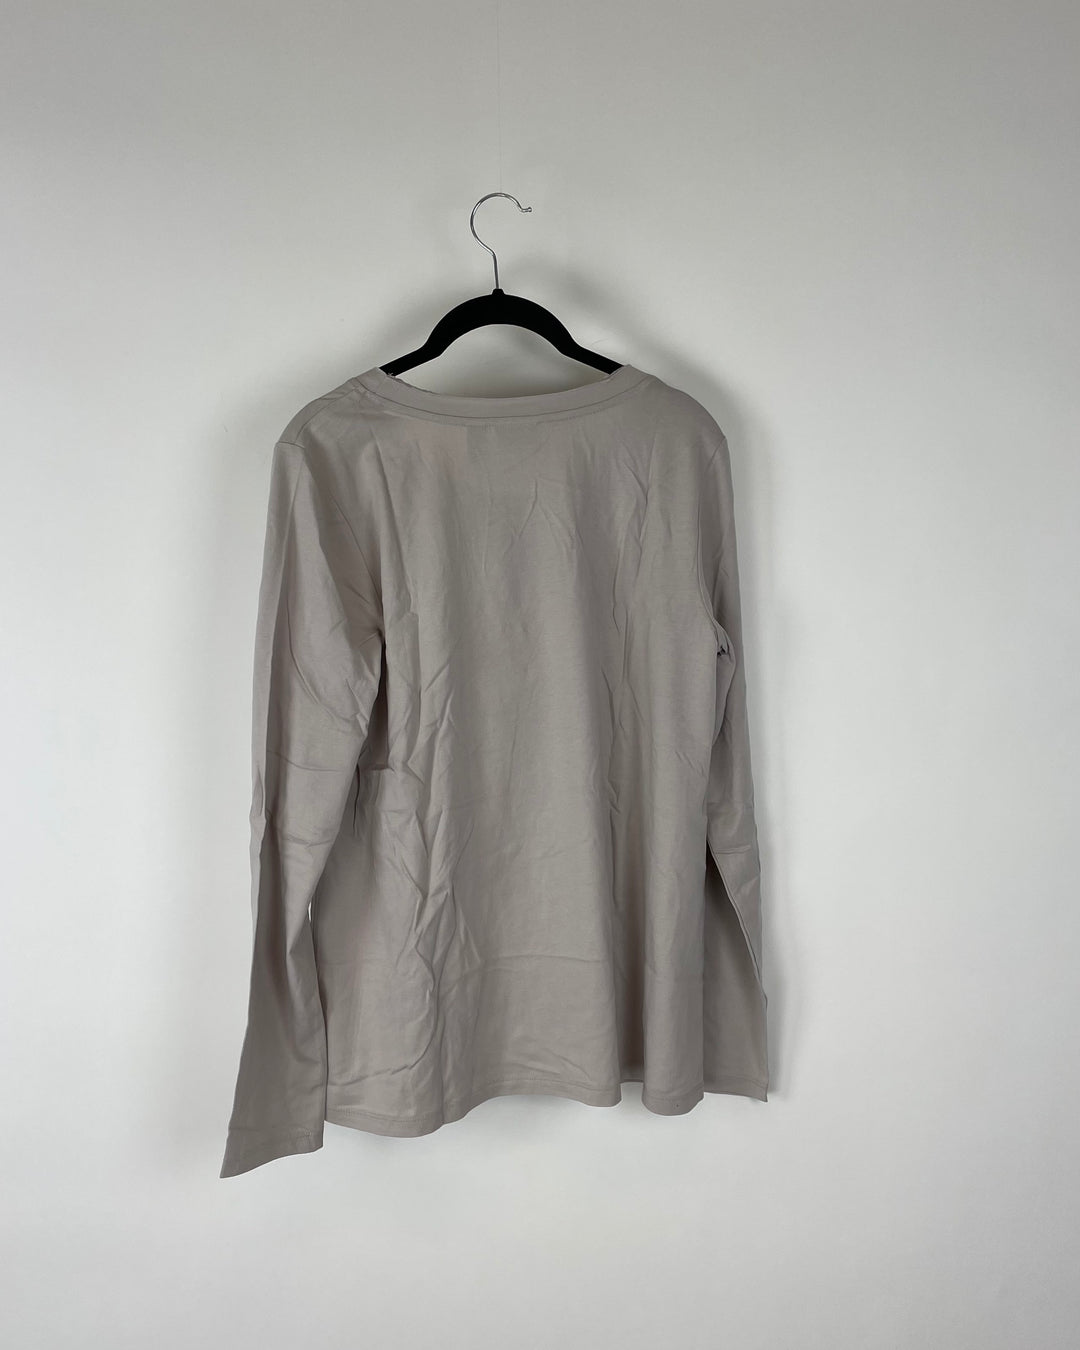 Light Grey Long Sleeve Top - Size 6-8